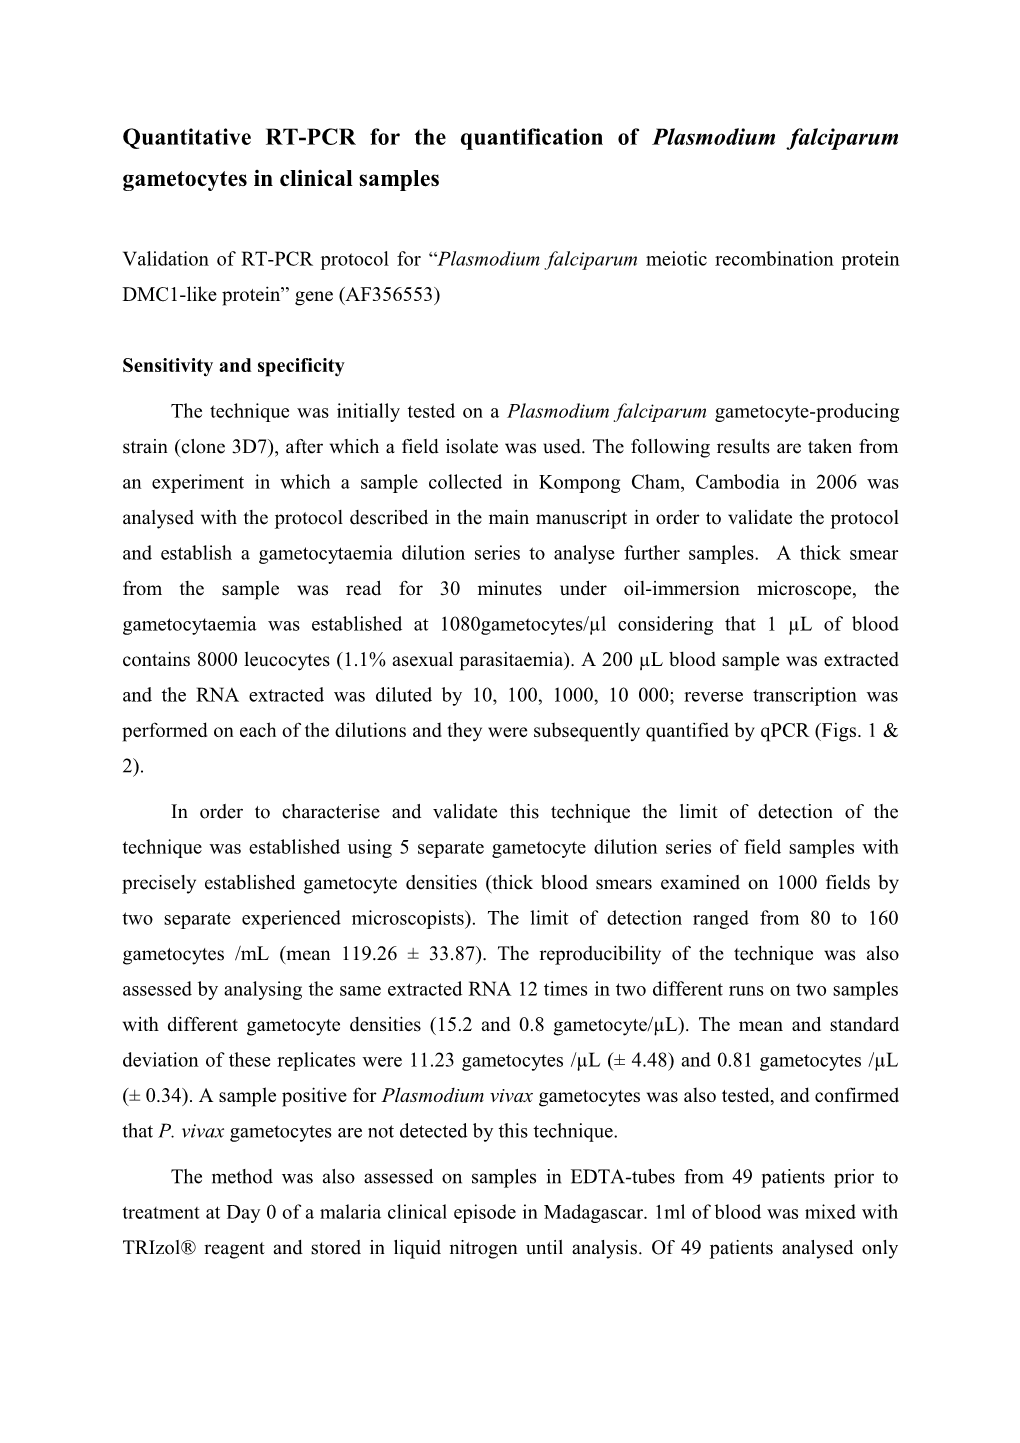 QRTPCR for the Quantification of Plasmodium Falciparum Gametocytes in Clinical Samples